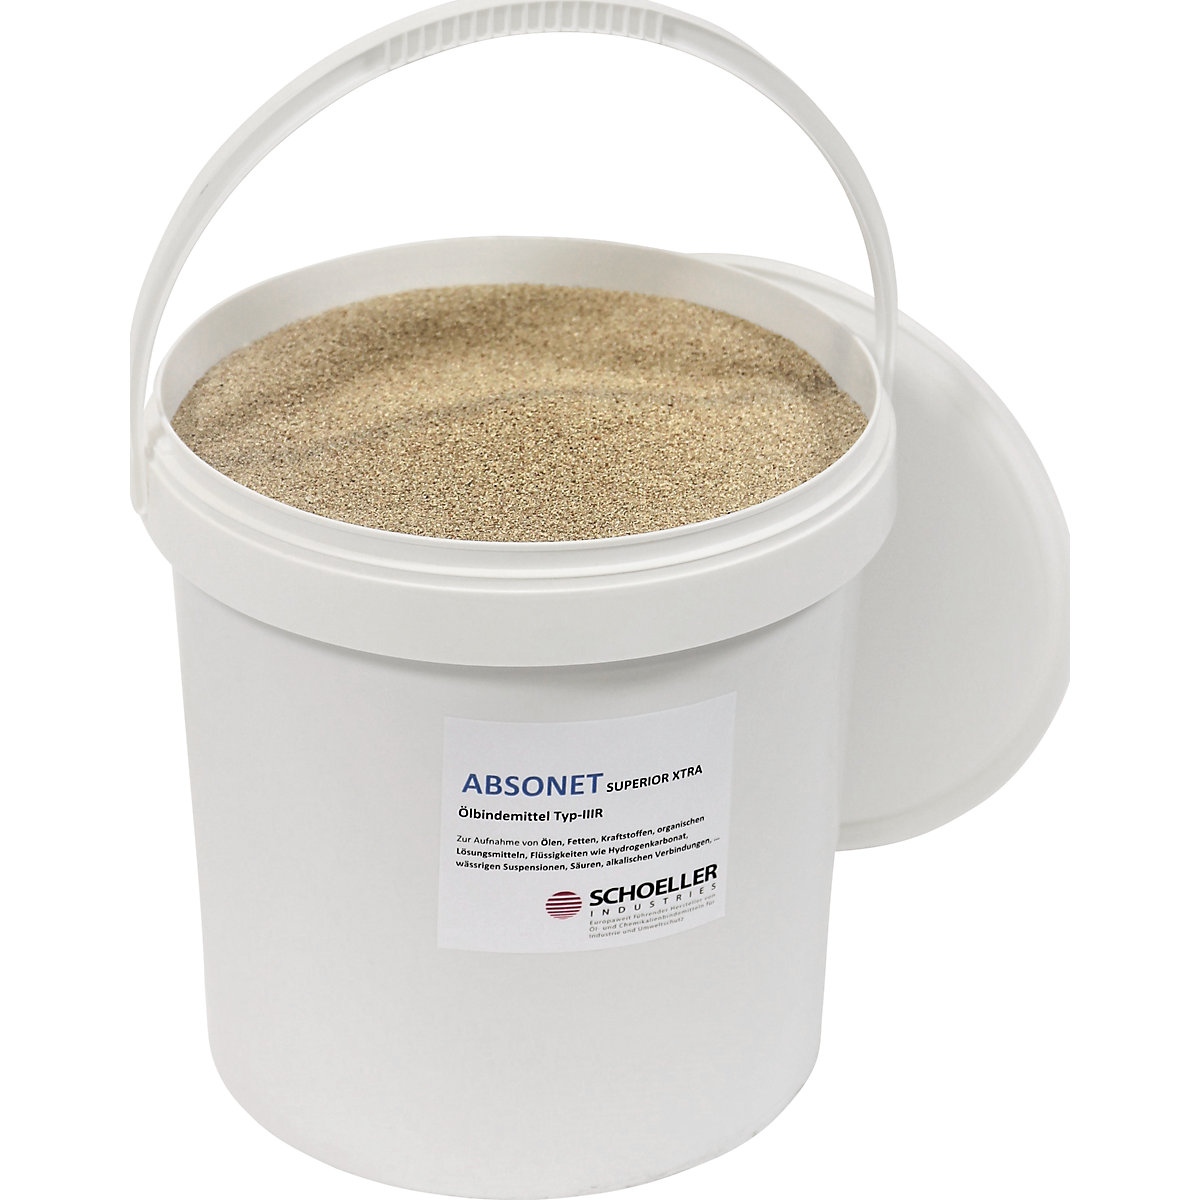 Universal absorbent granulate type III R extra fine grain